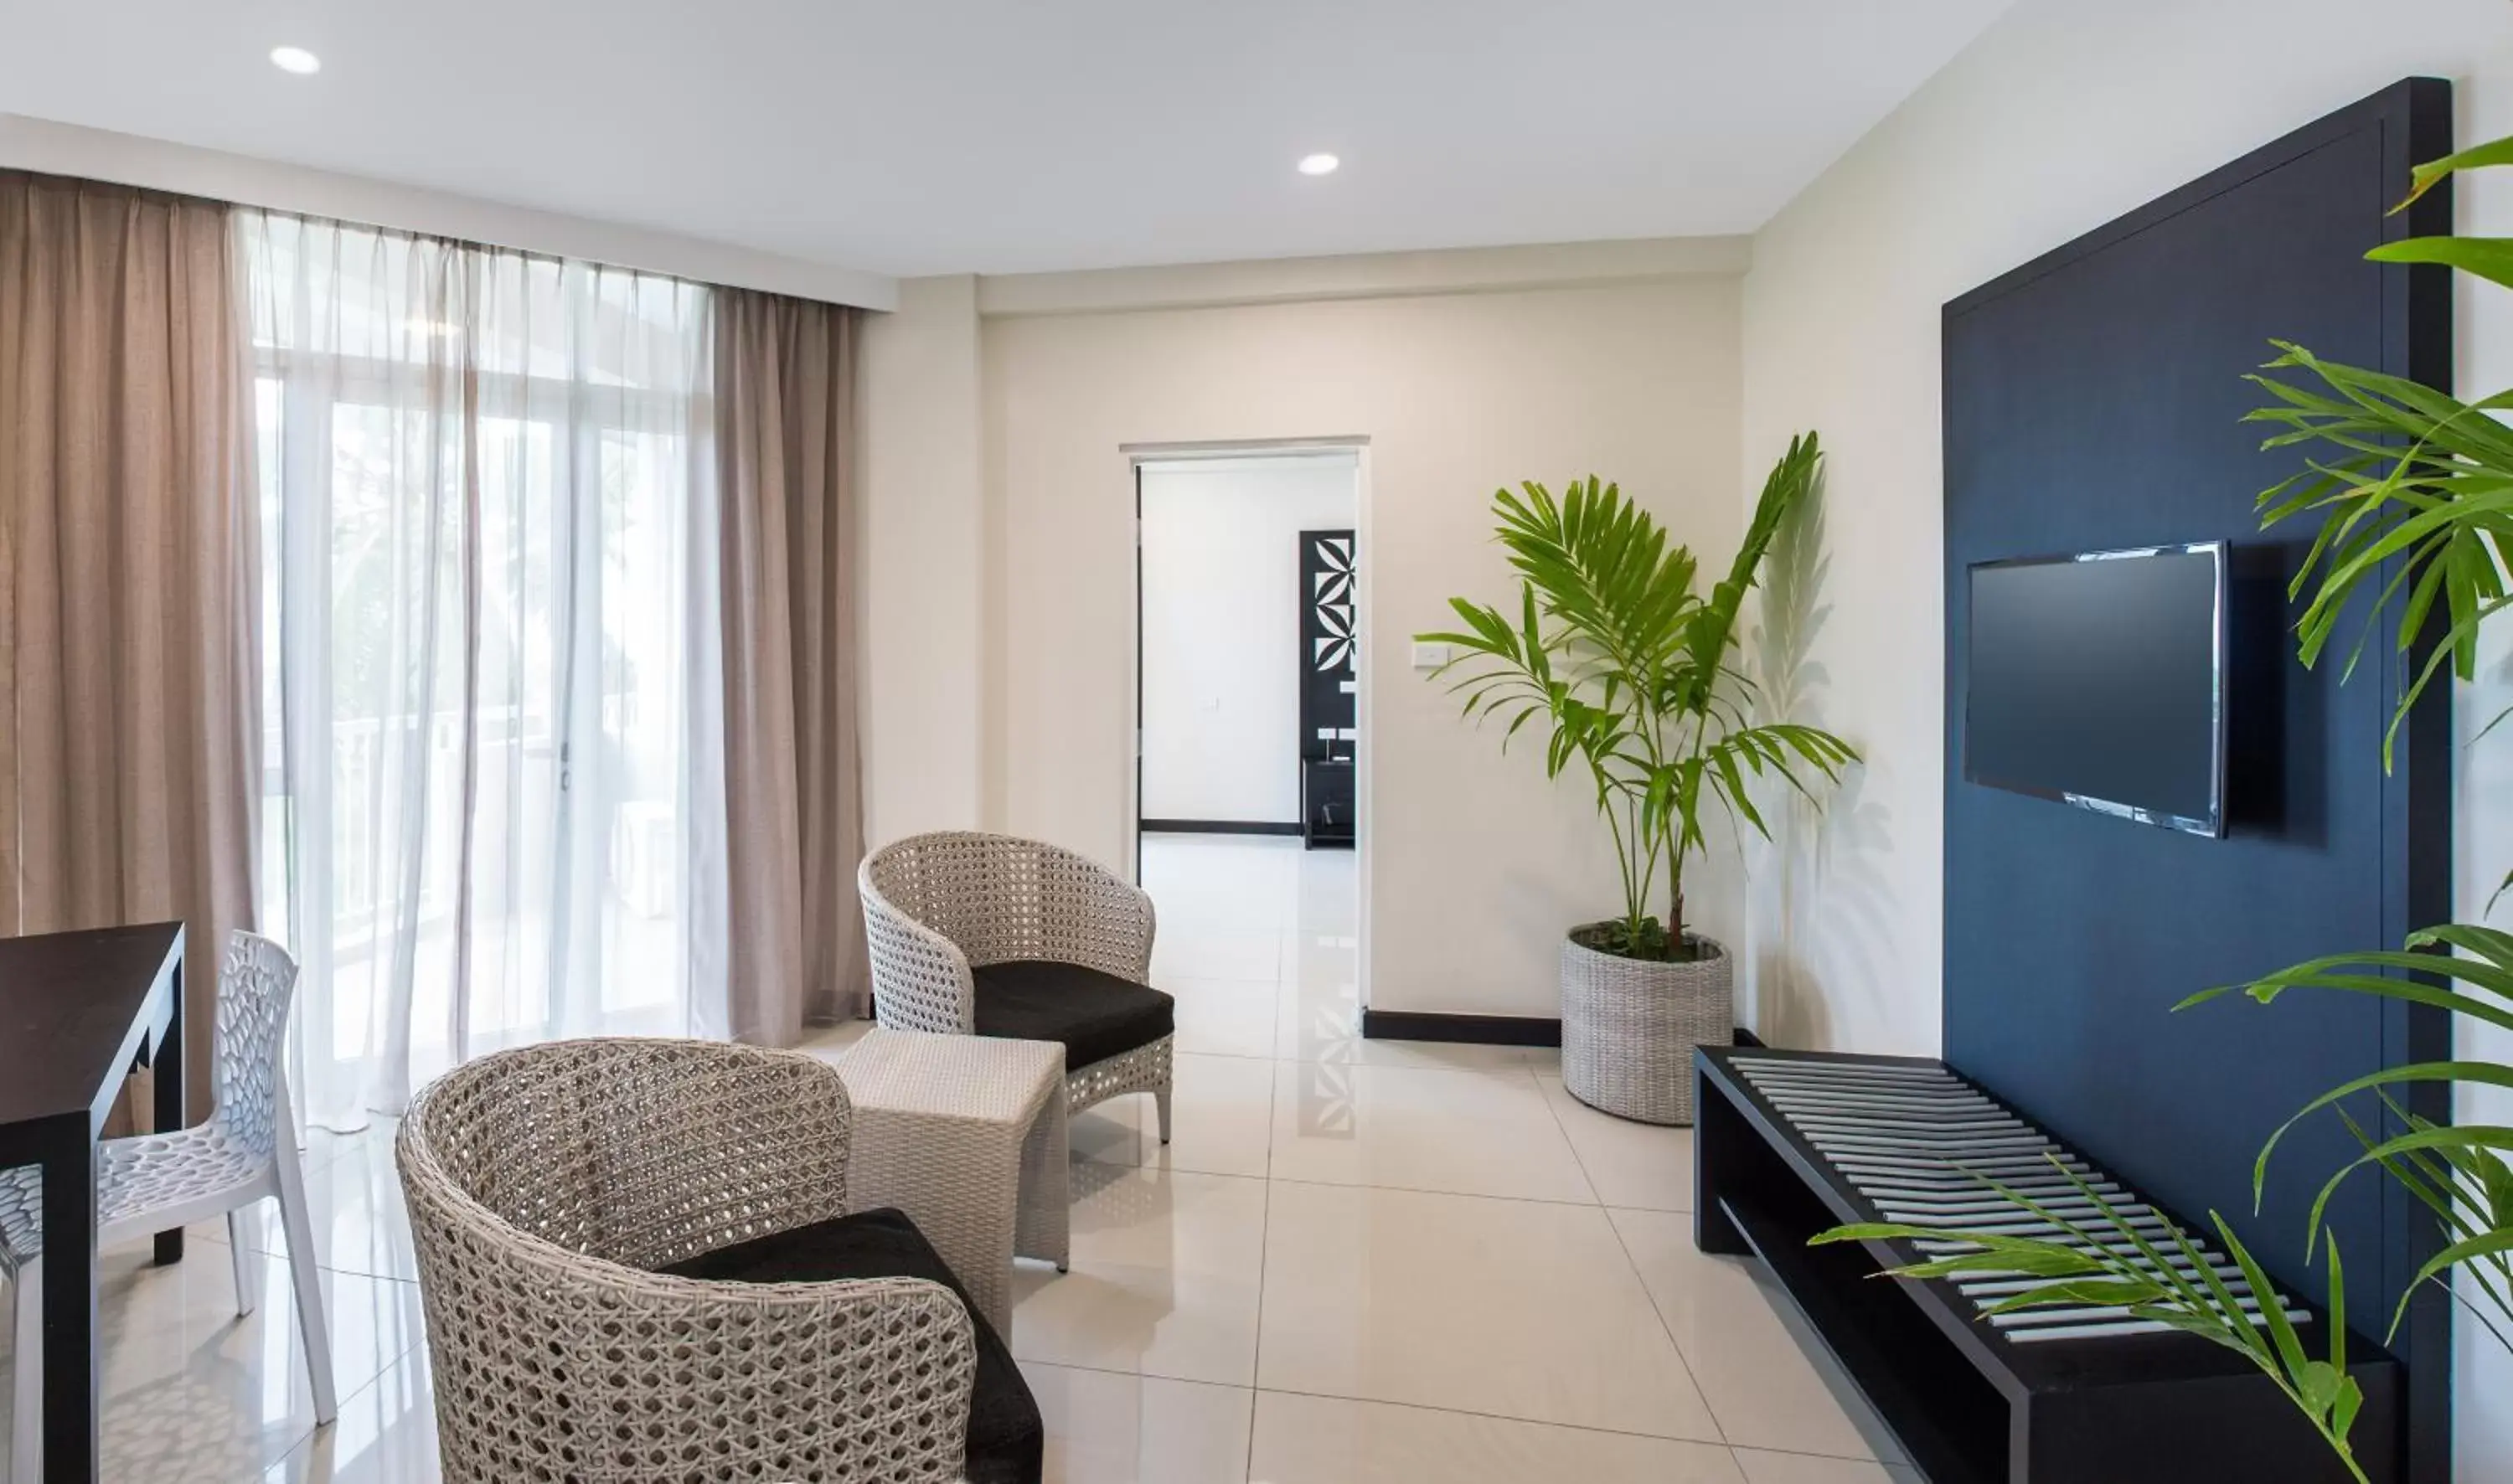 TV and multimedia, Seating Area in Tanoa International Dateline Hotel